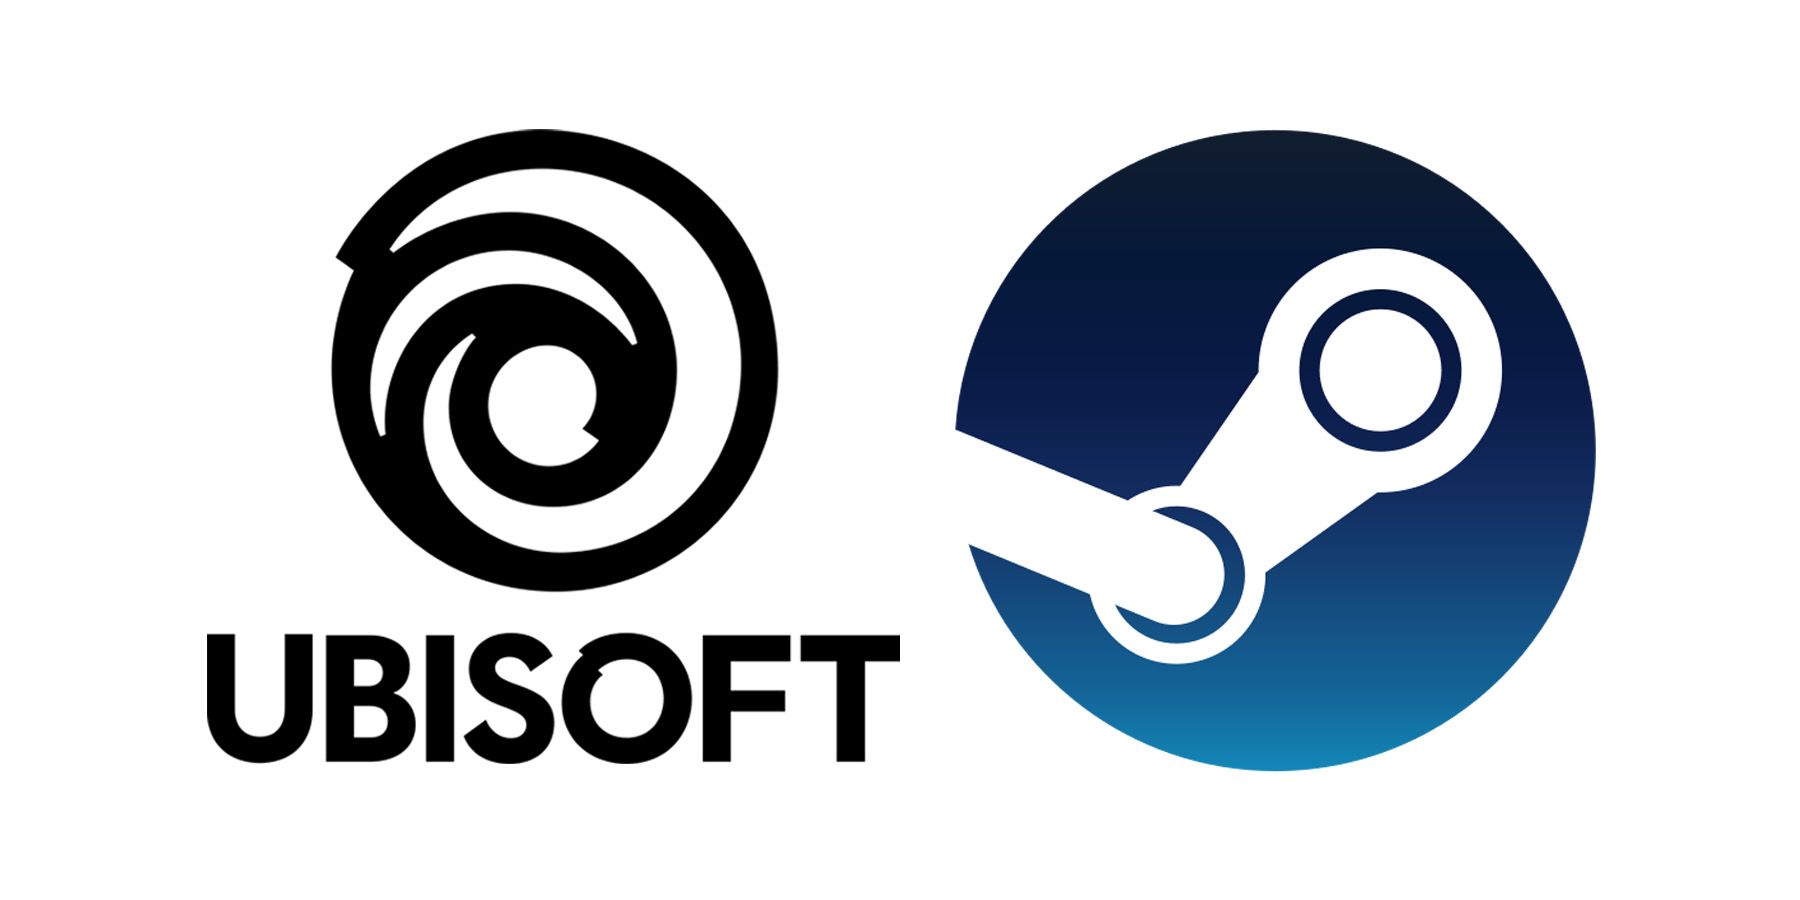 ubisoft and steam logo